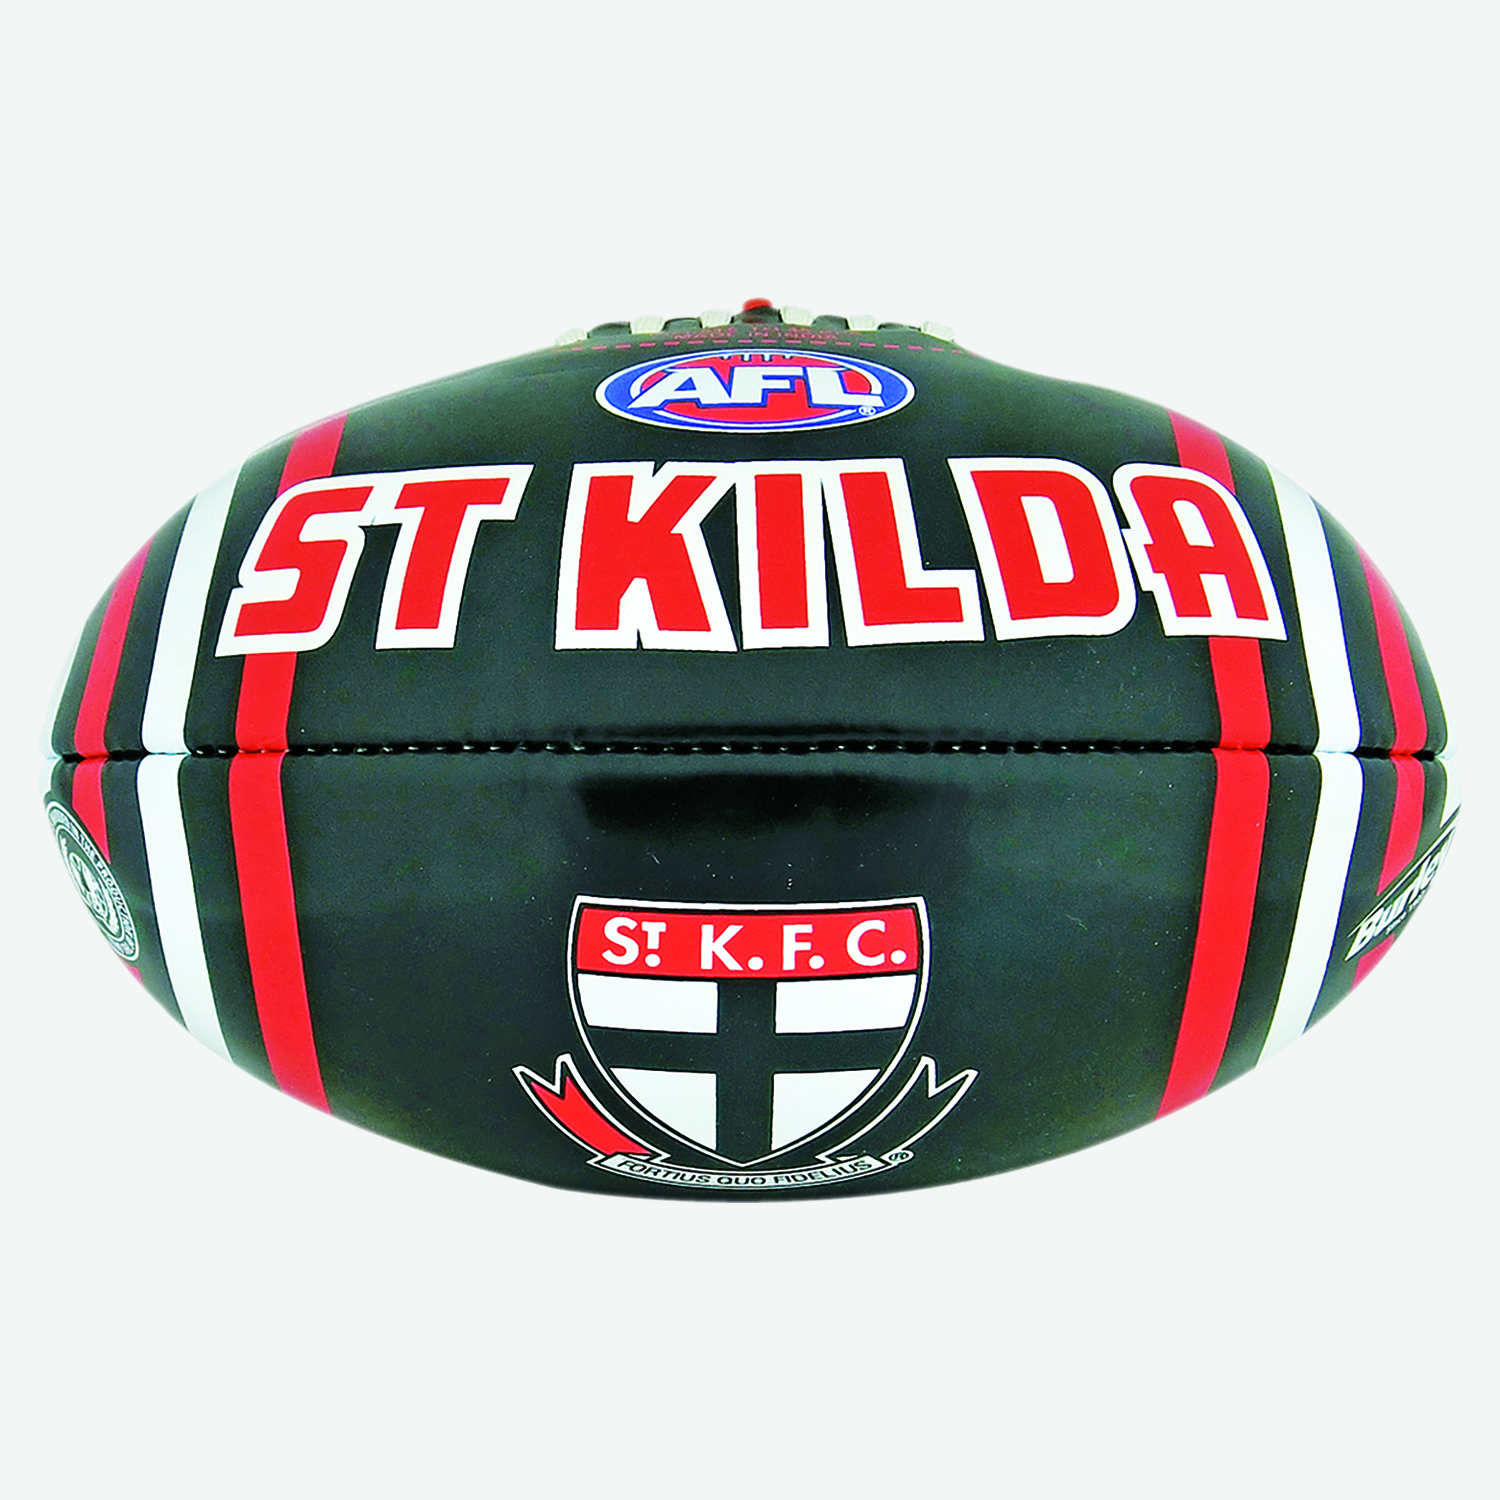 AFL vortex team balls